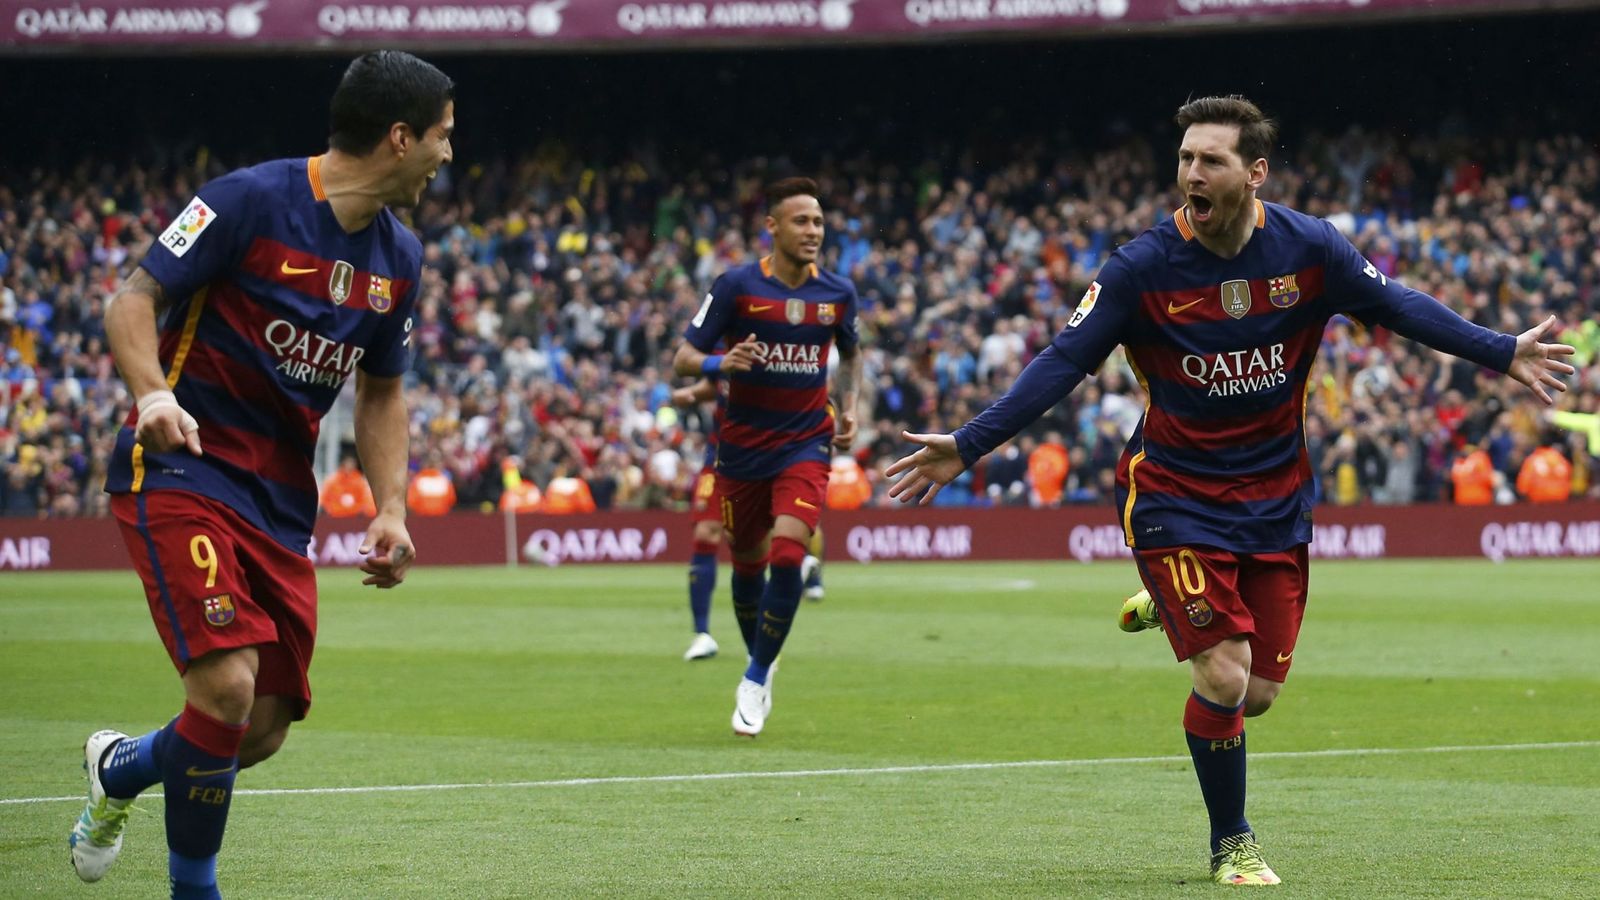 Foto: Football soccer - barcelona v espanyol - spanish liga bbva